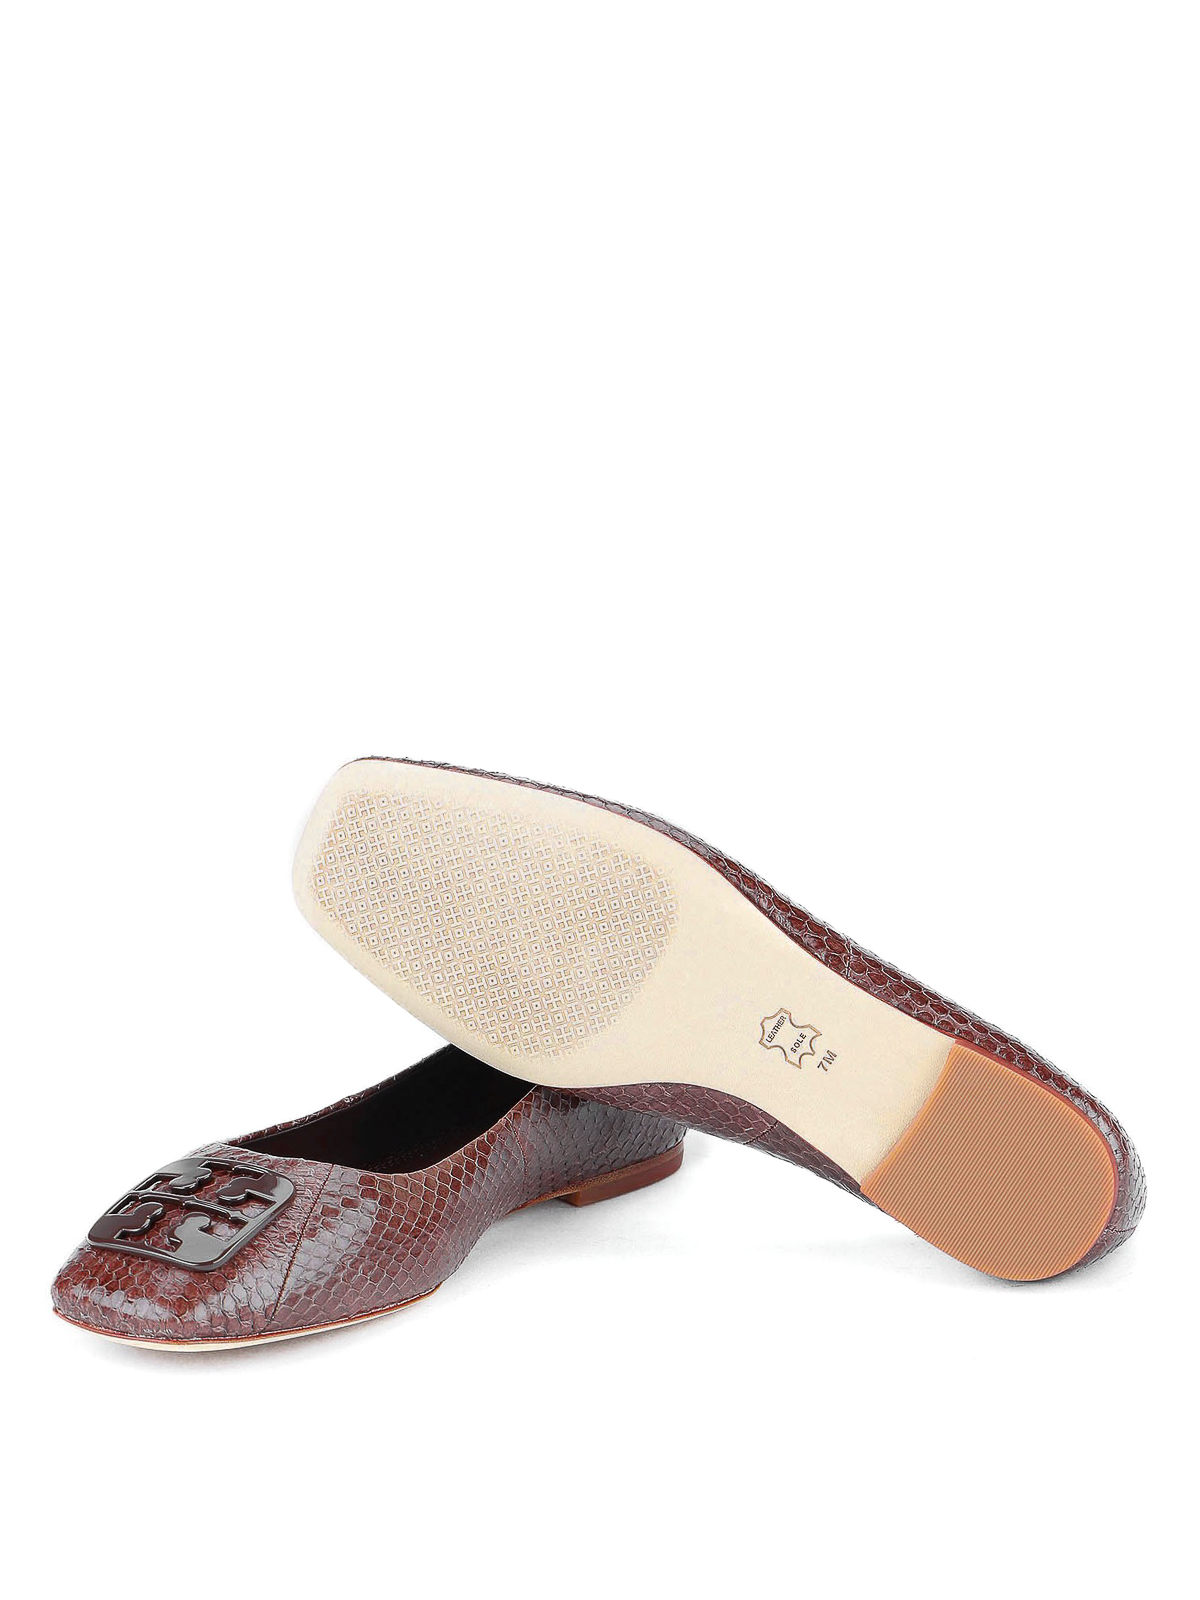 Flat shoes Tory Burch - Georgia flats - 76198207 | Shop online at iKRIX